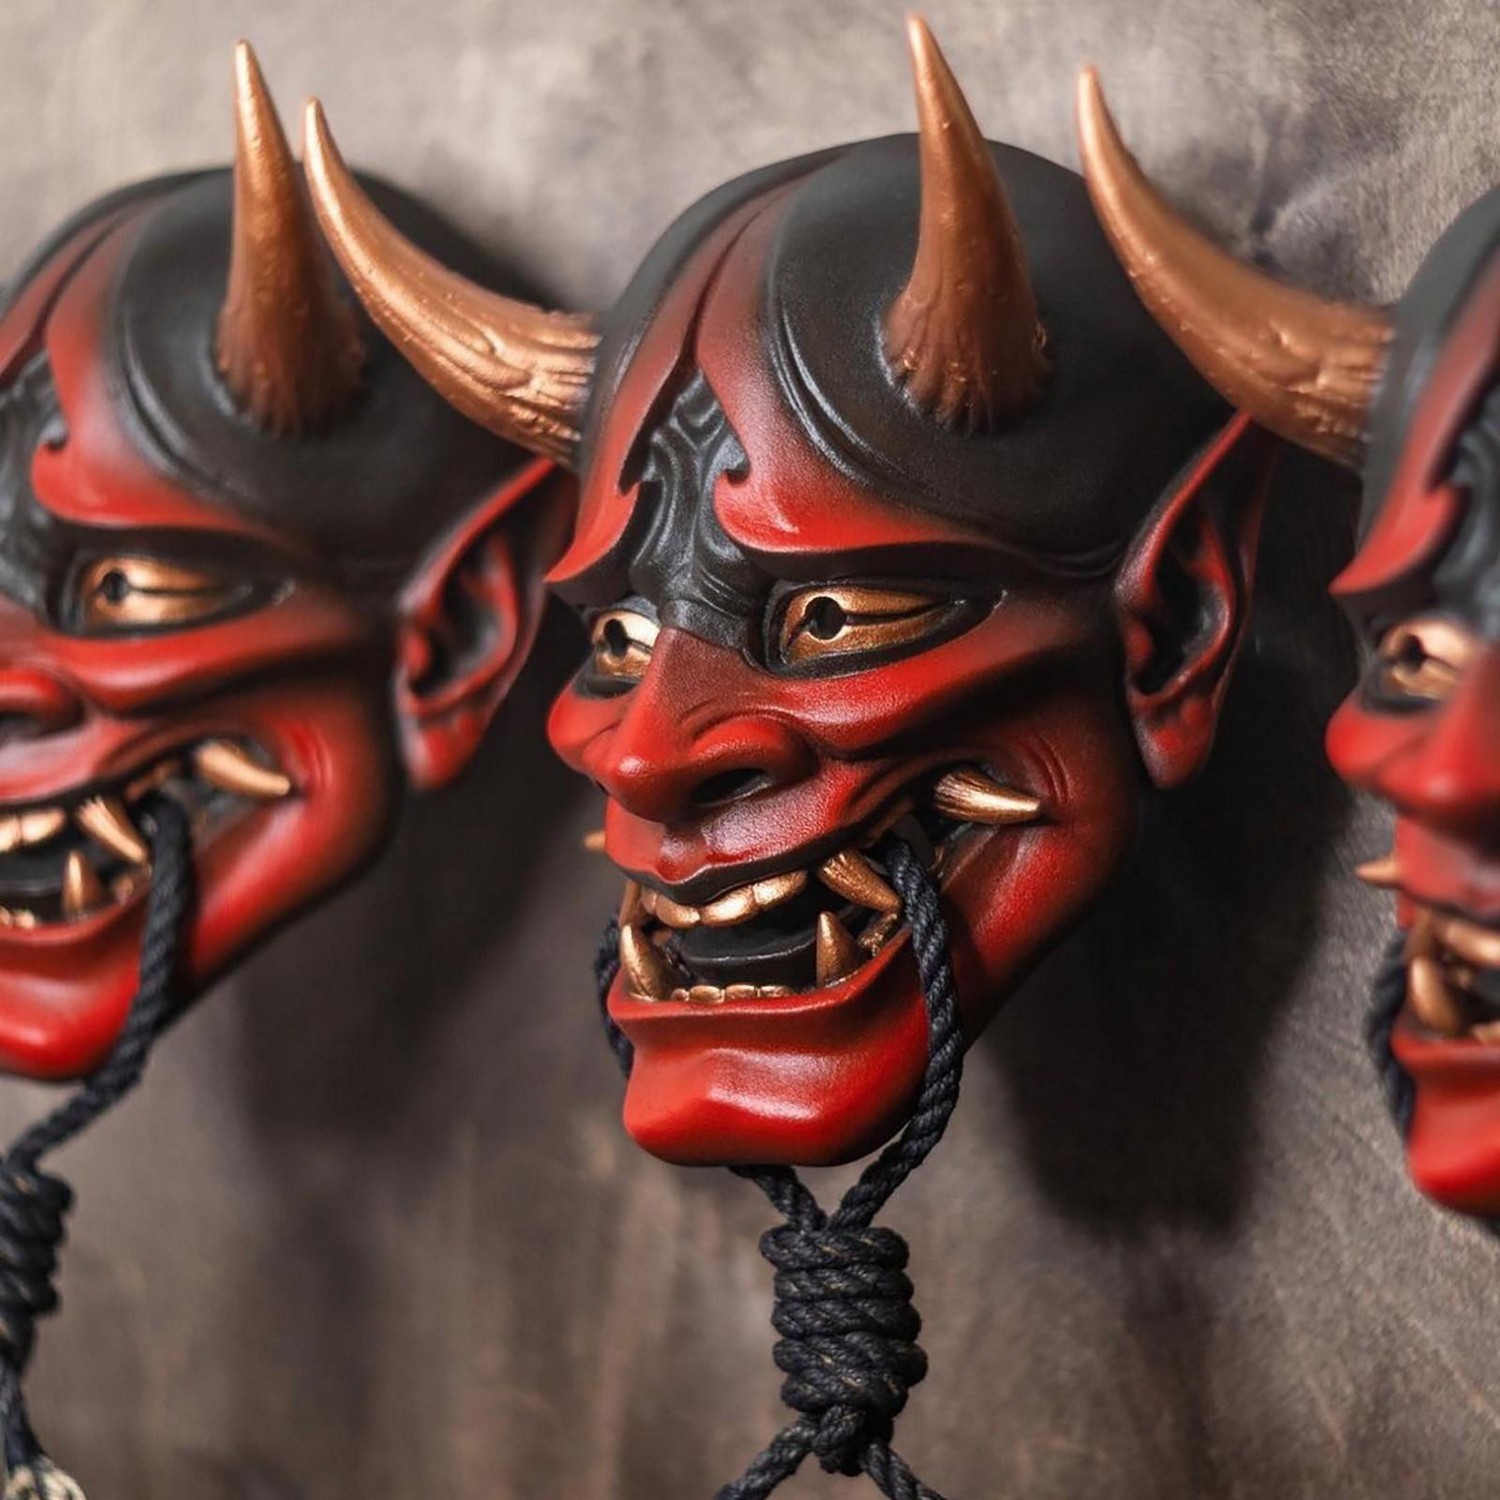 Маска головы демона на Хэллоуин - японский мотив